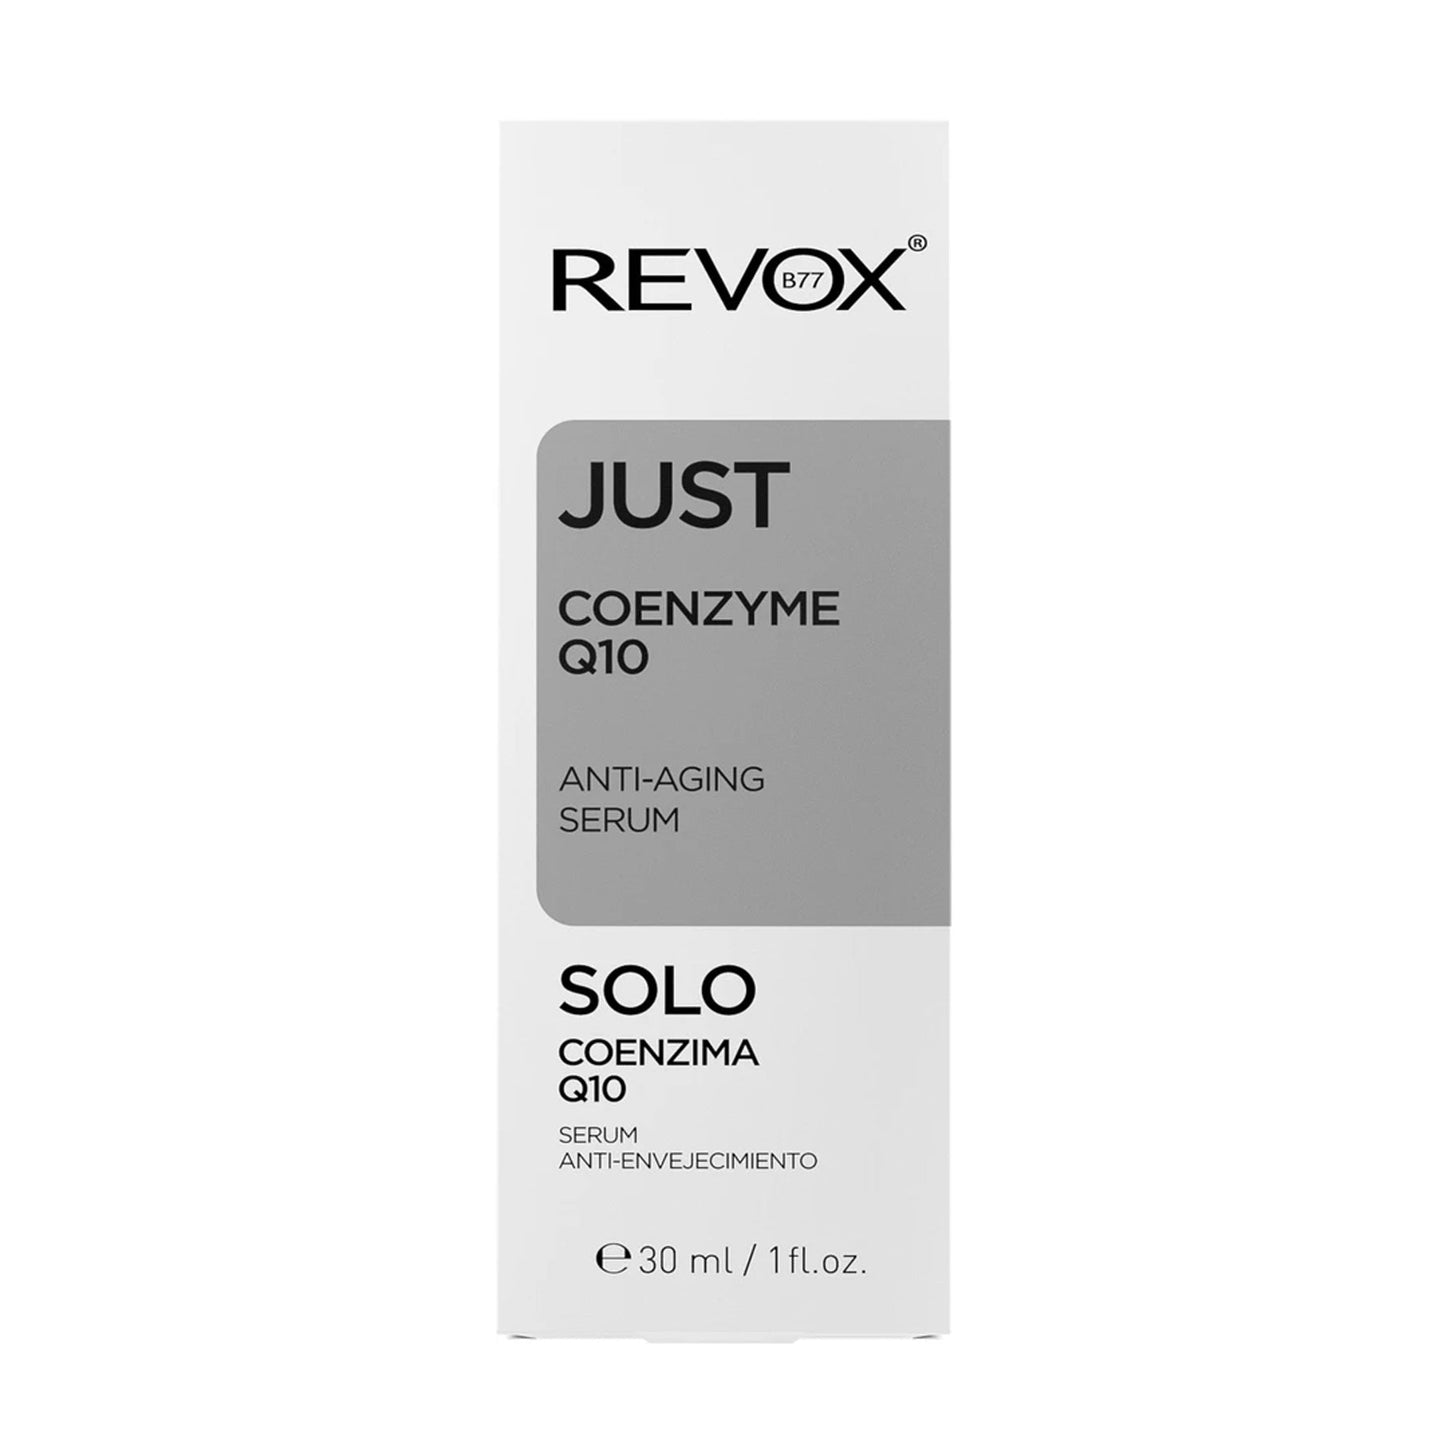 Revox B77 JUST Coenzyme Q10 1%